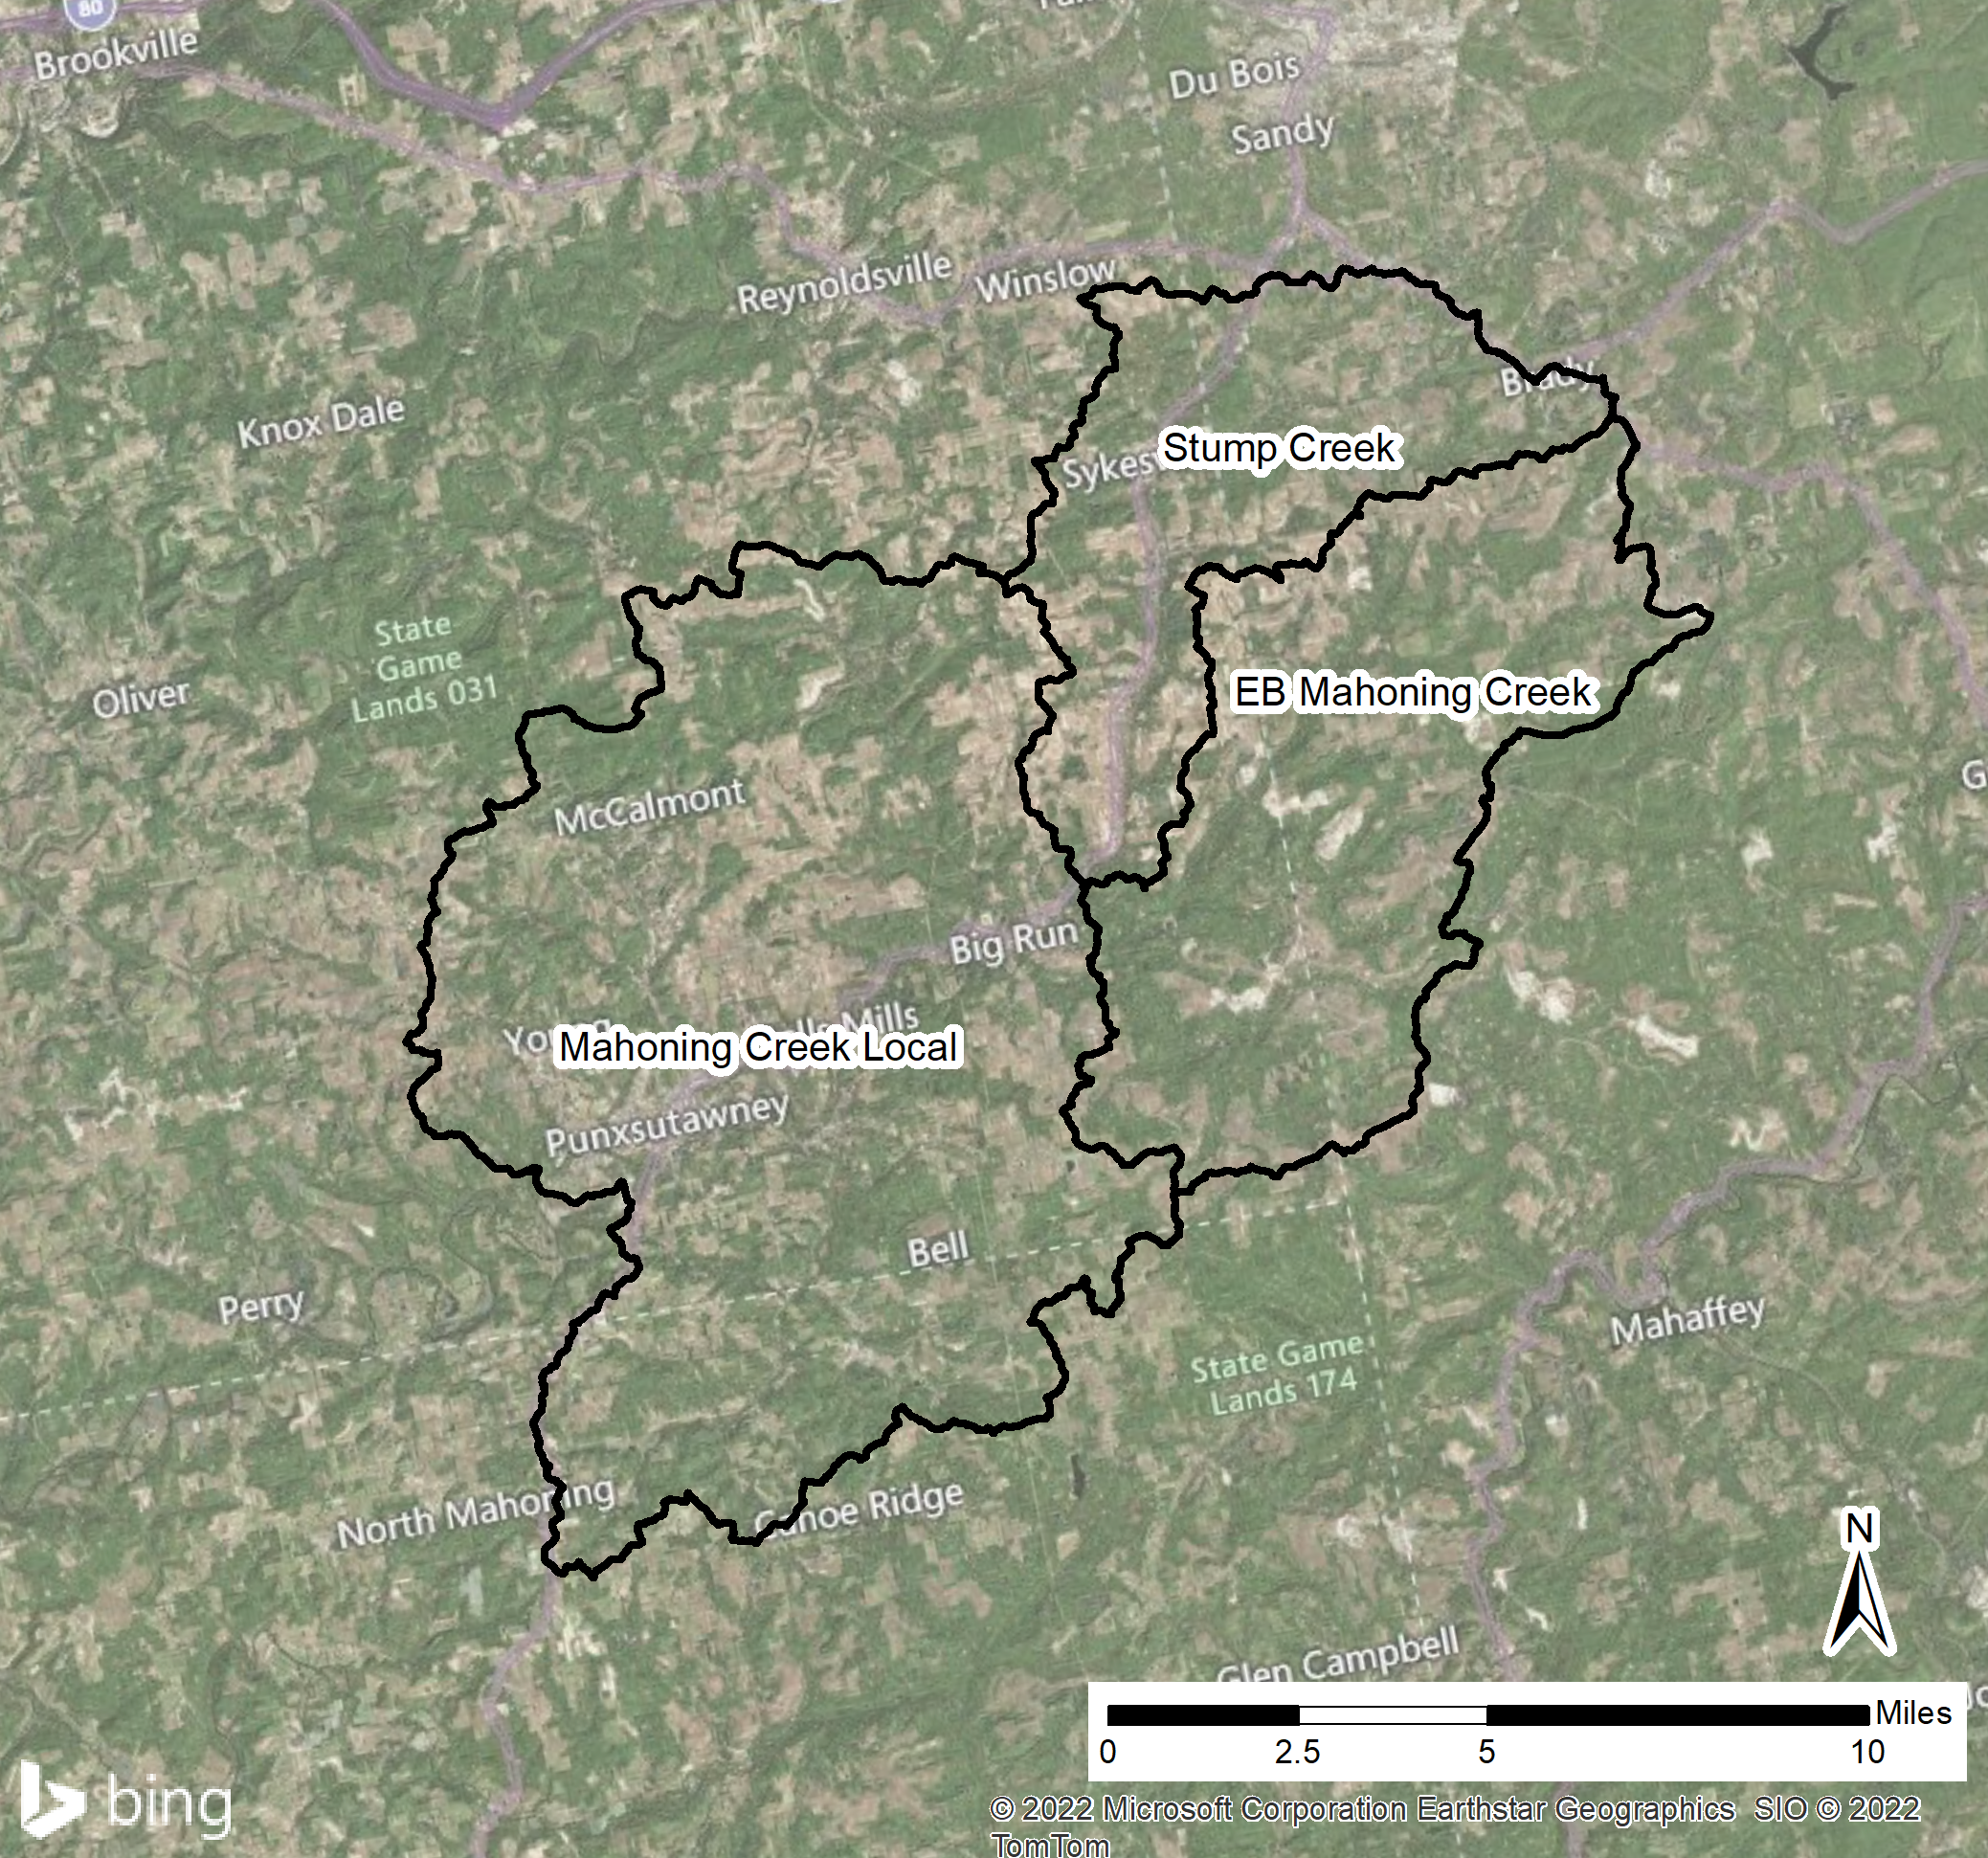 Punxsutawney watershed map with 3 subbasins